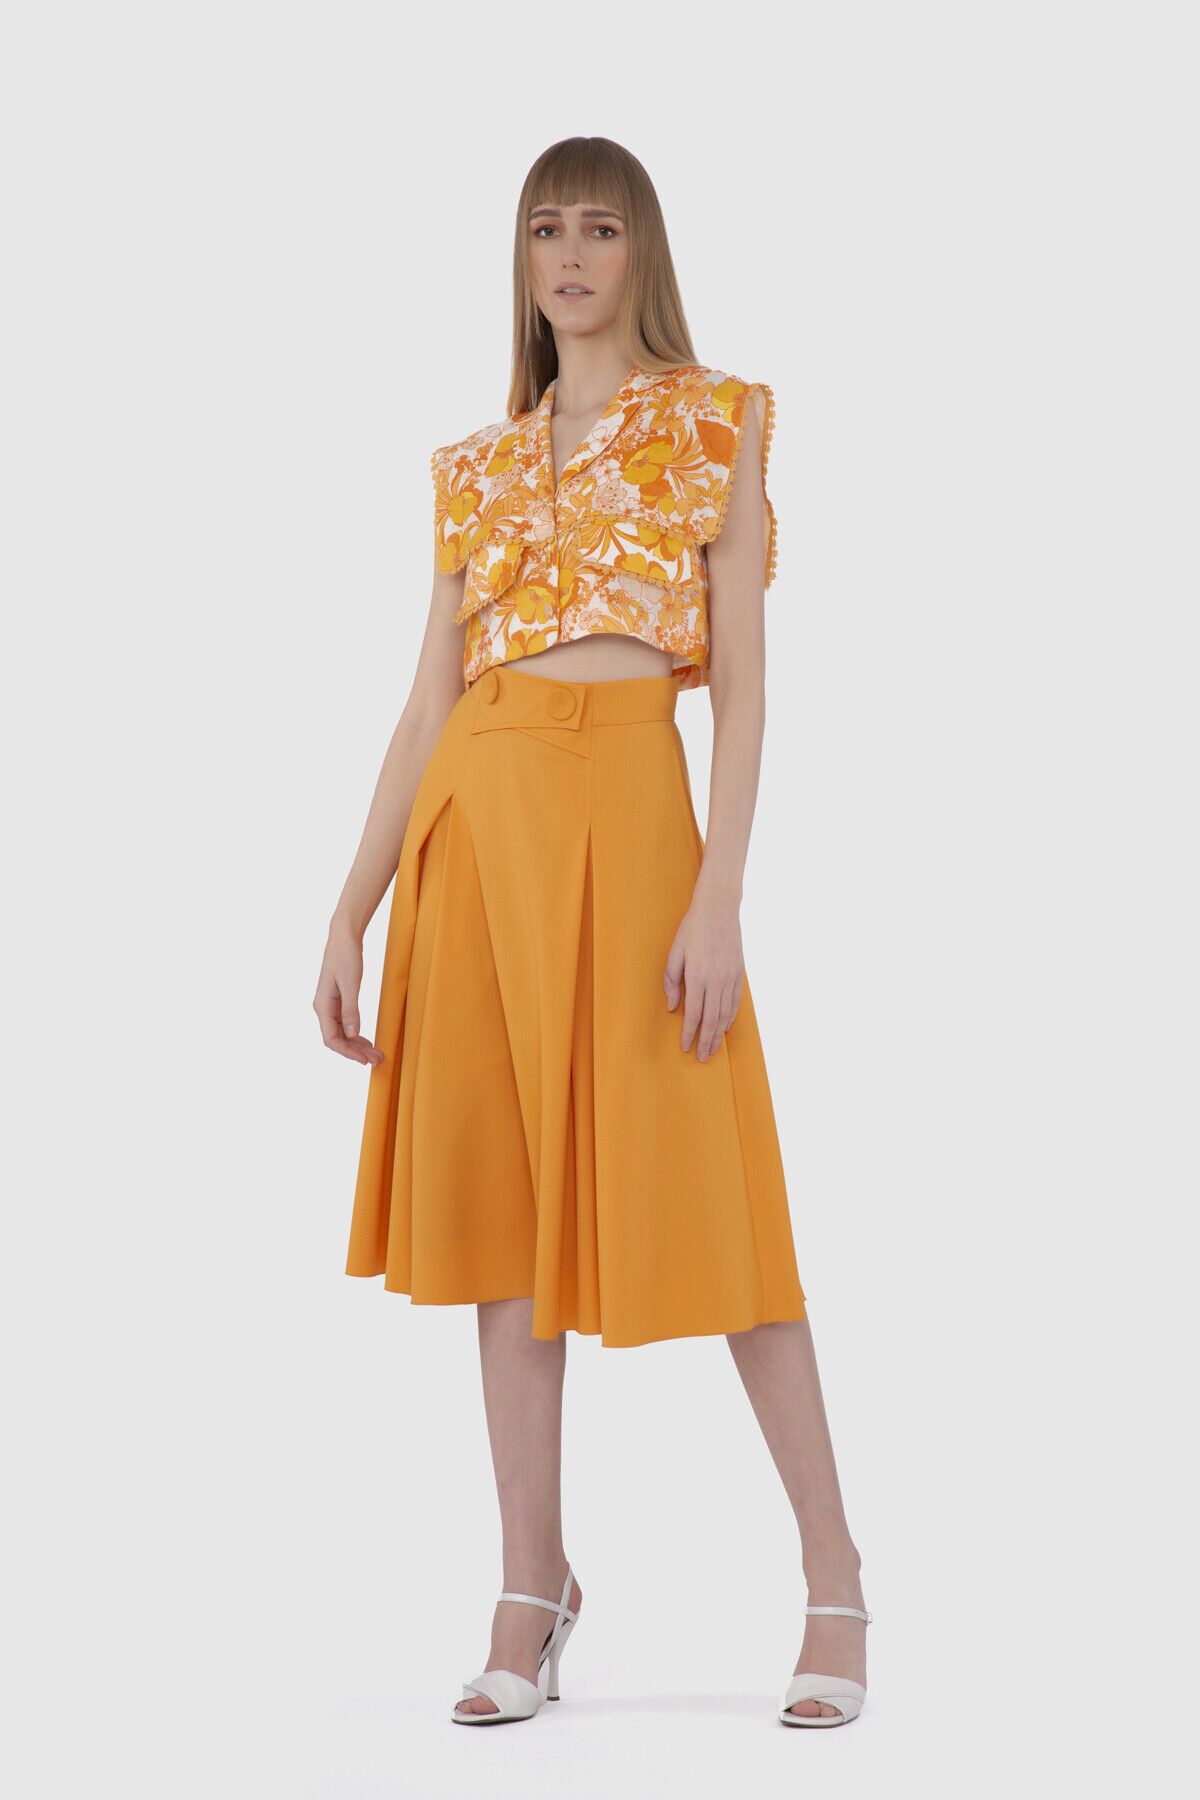  GIZIA - High Waist Button Detailed Midi Length Orange Skirt